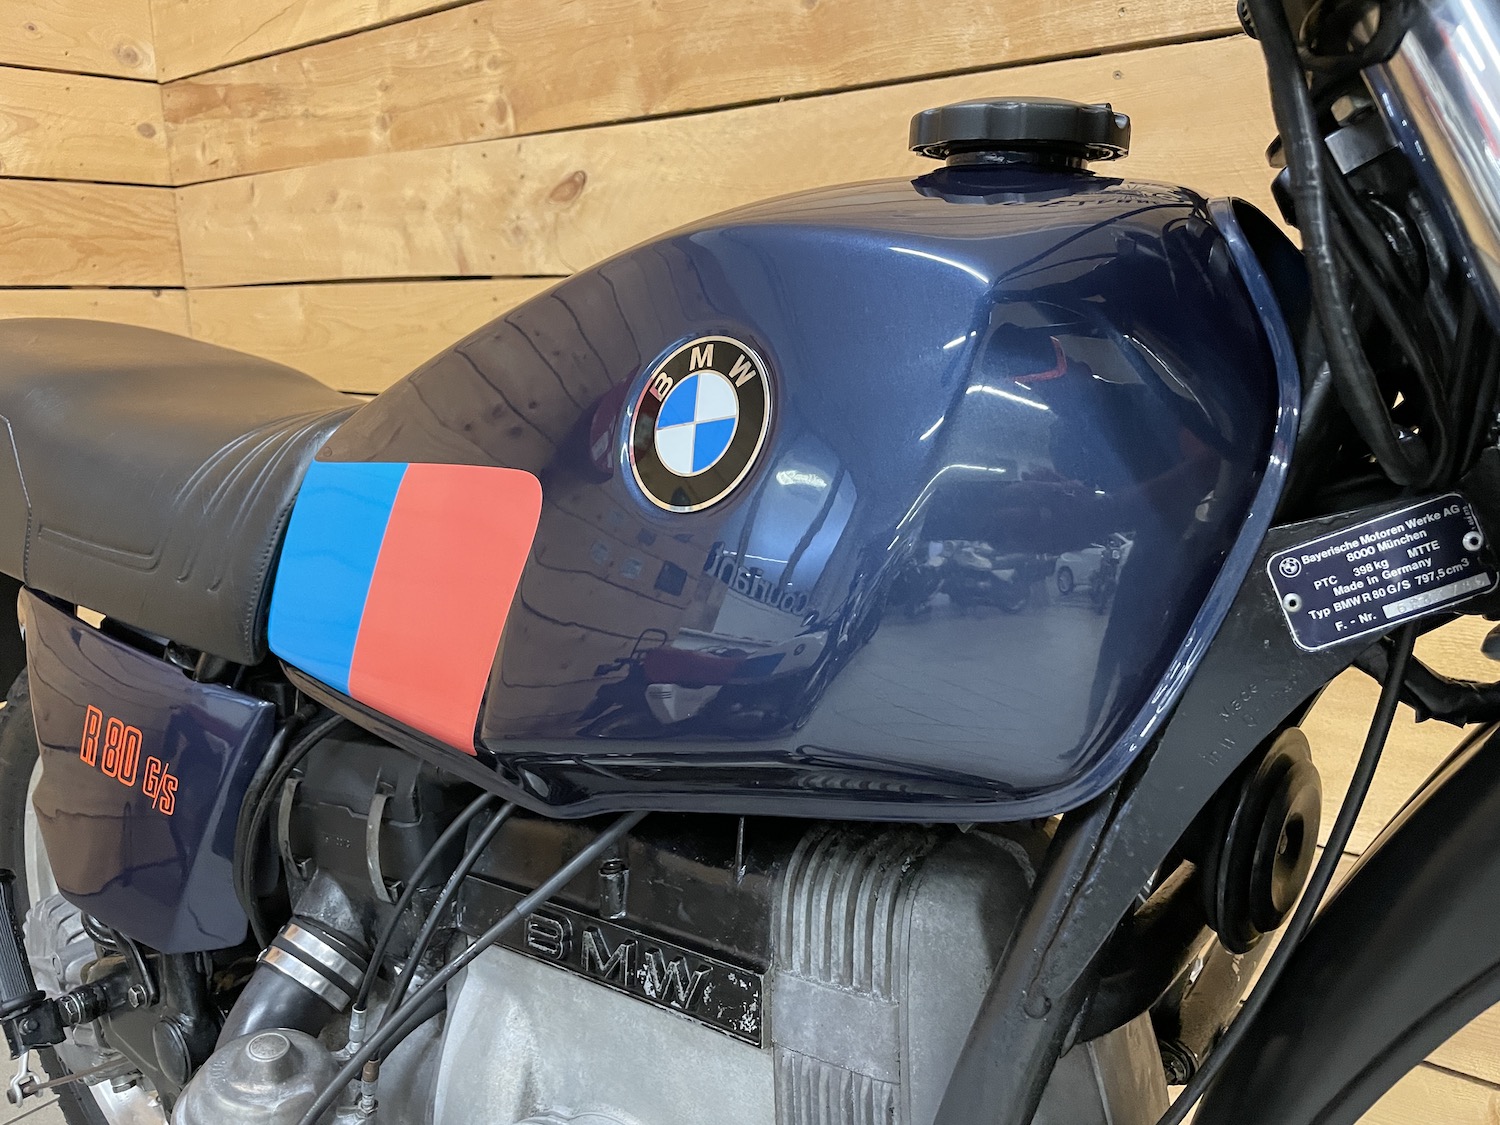 BMW_R80GS_cezanne_classic_motorcycle_8-122.jpg